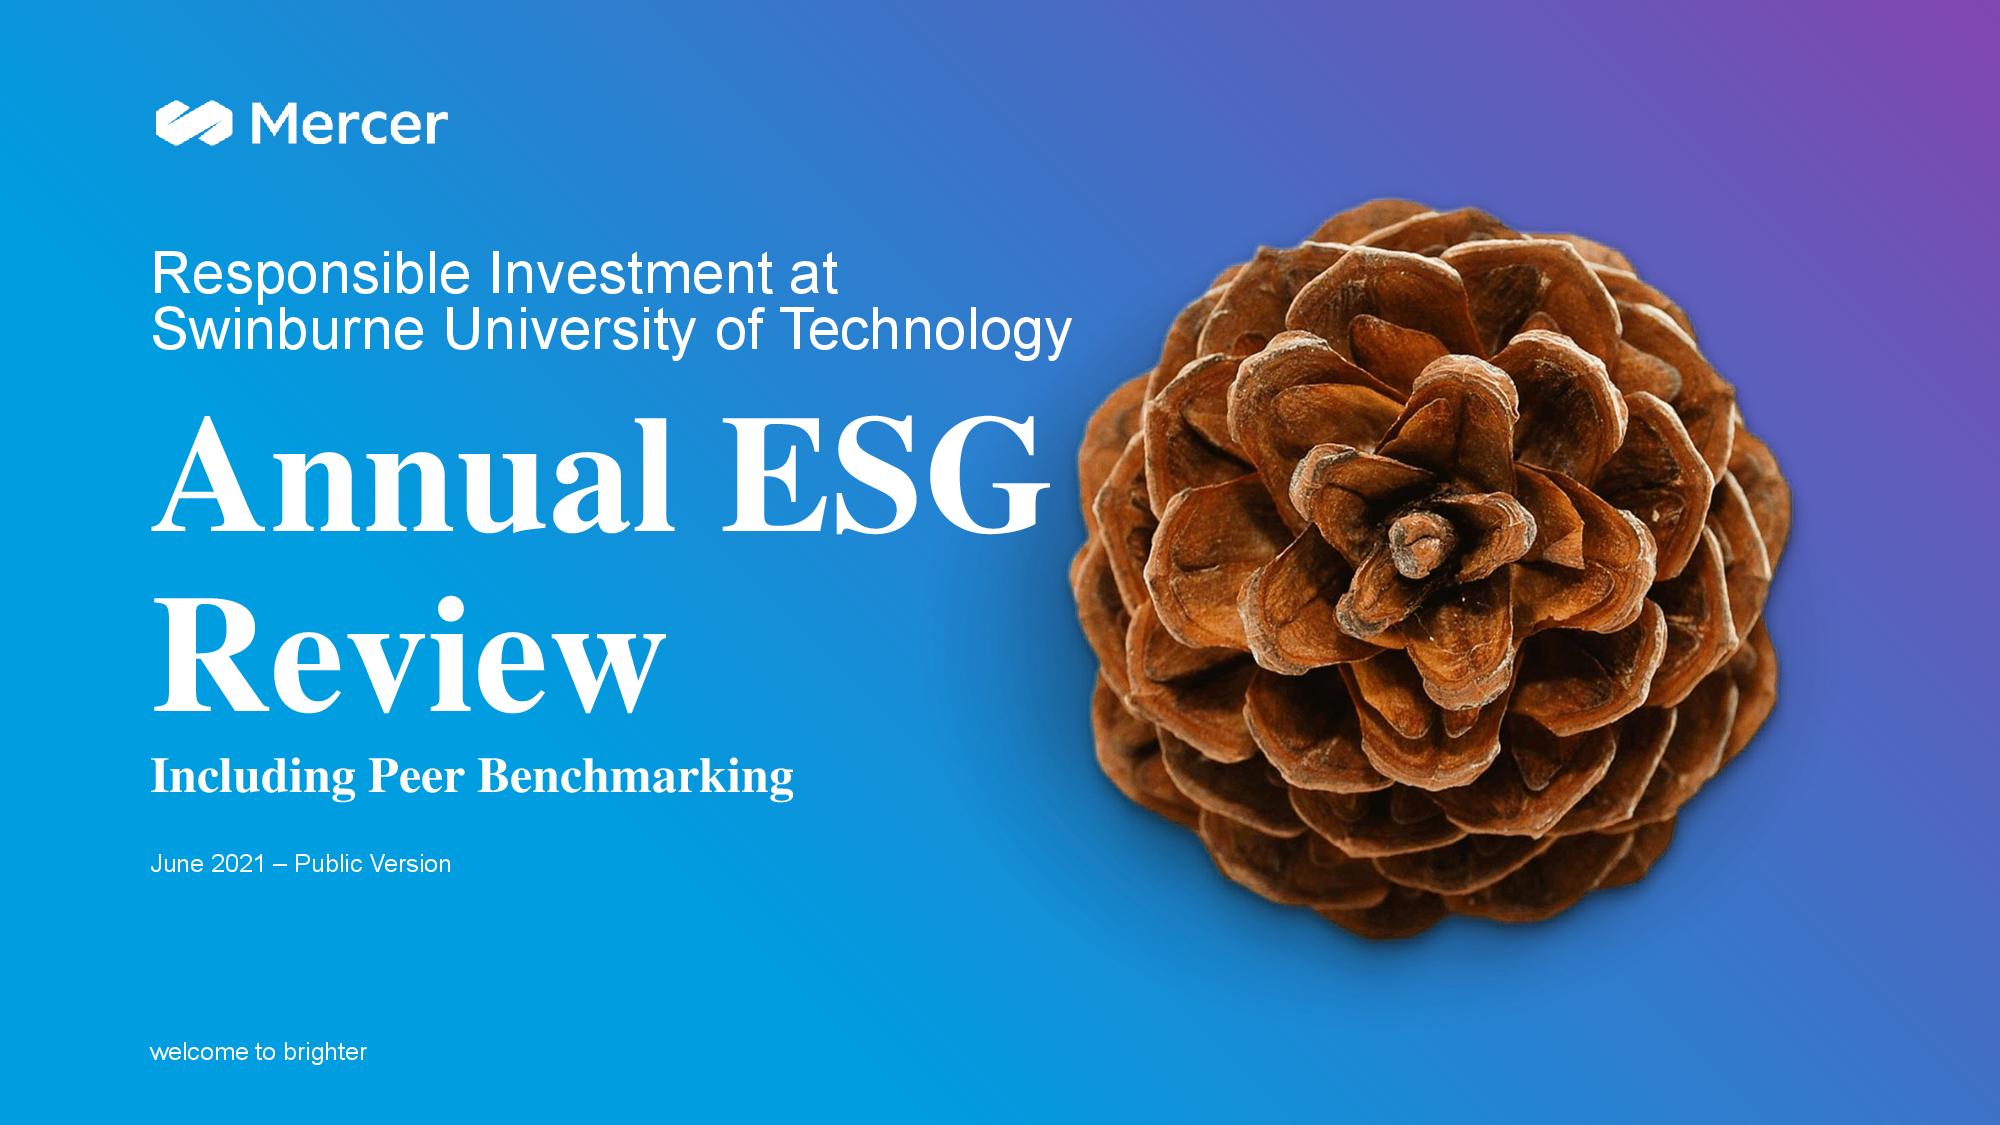 Responsible Investment at Swinburne - Annual ESG Review June 2021